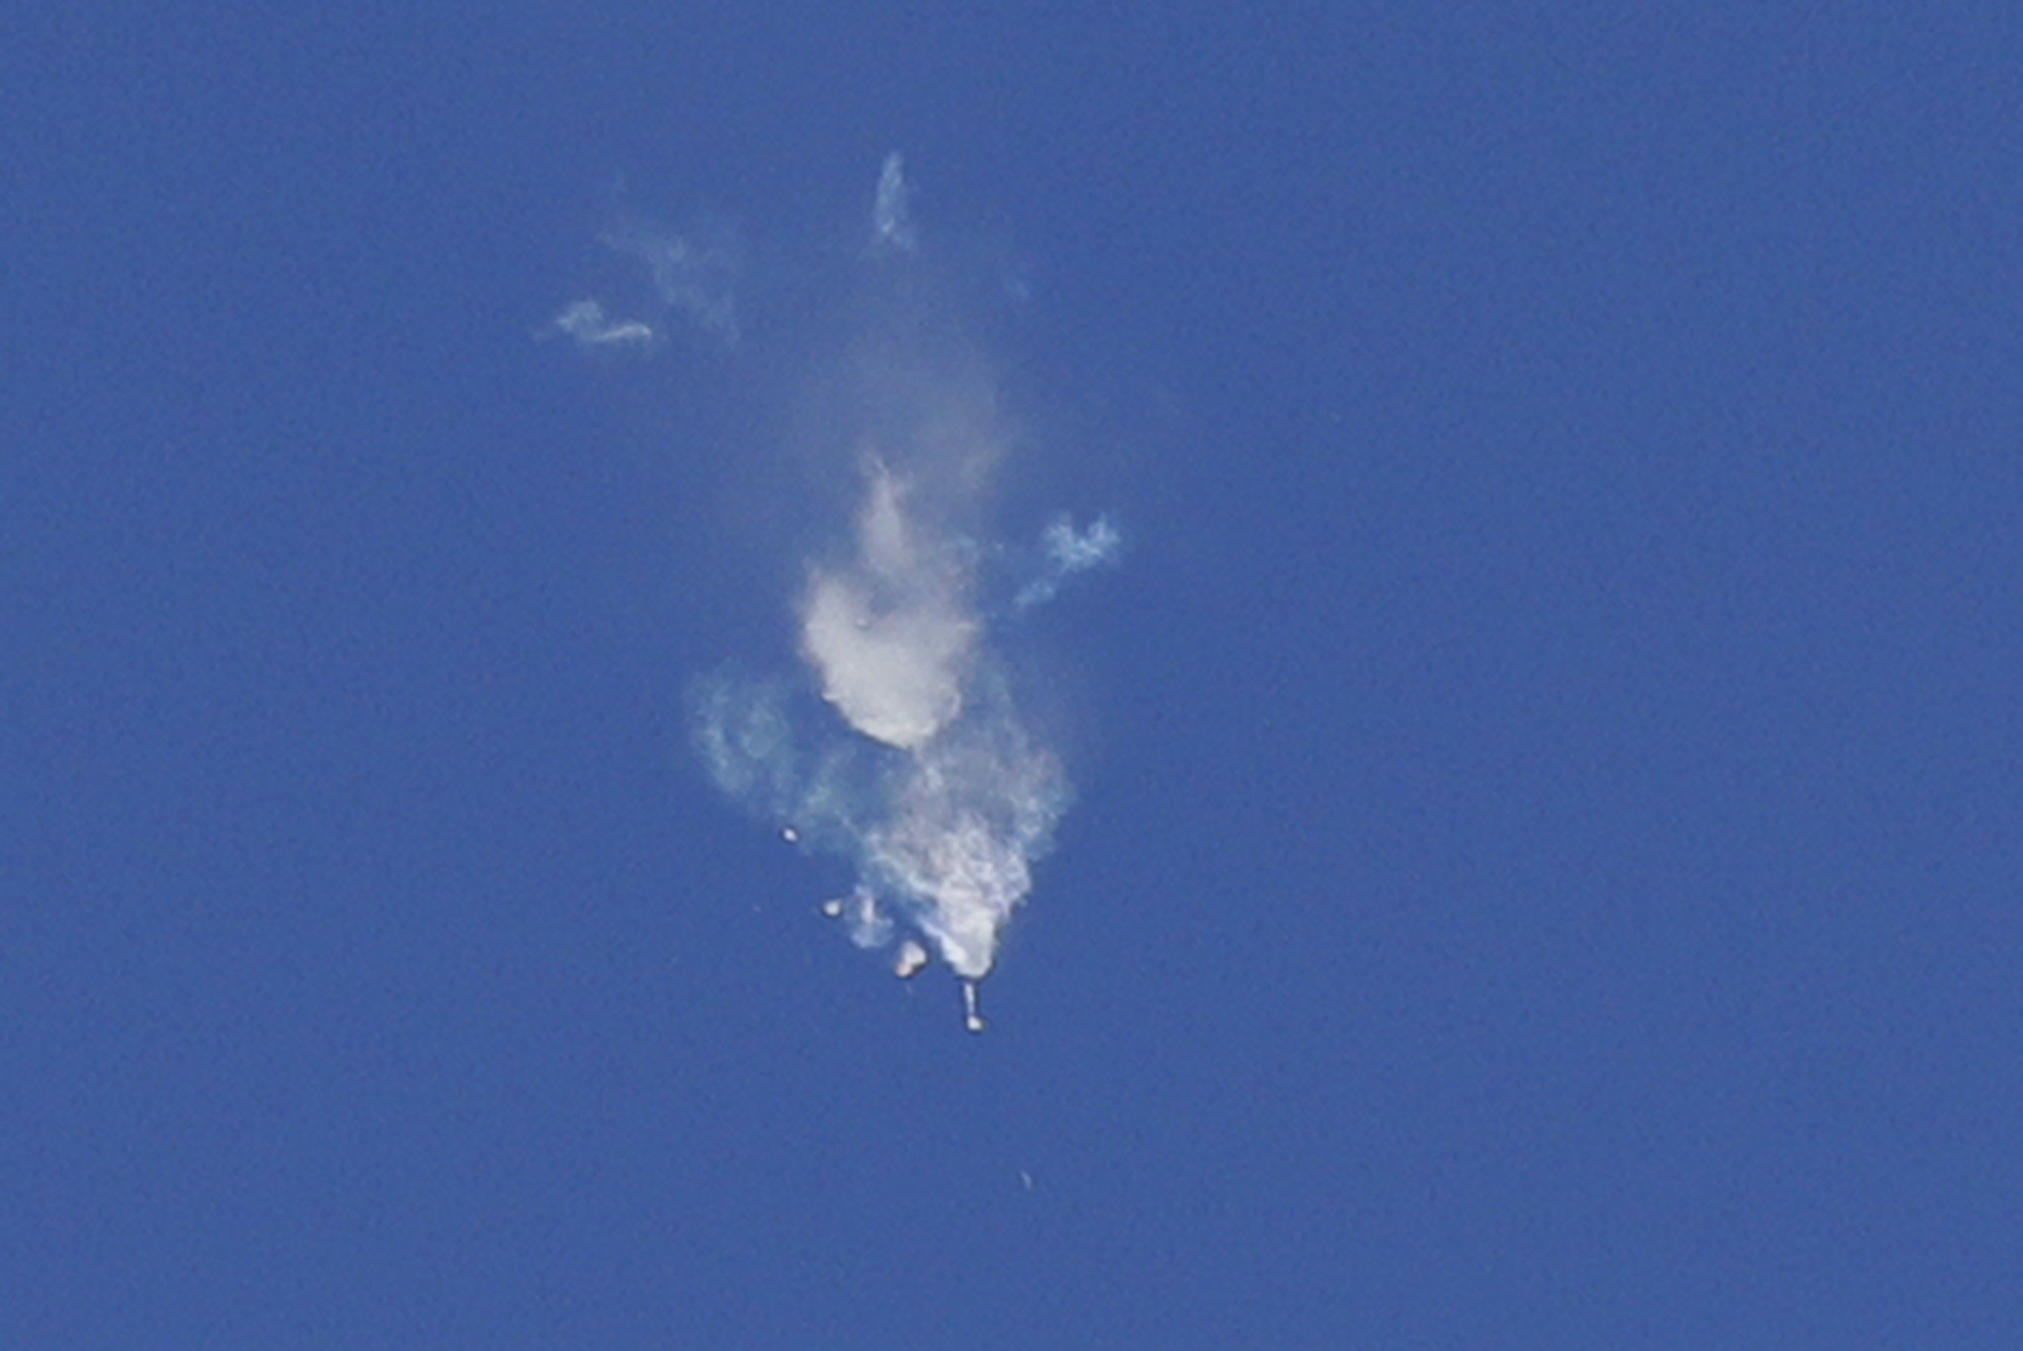 Soyuz rocket launch International Space Station mission aborted as Soyuz rocket failure forces NASA astronaut, Russian cosmonaut to make emergency landing